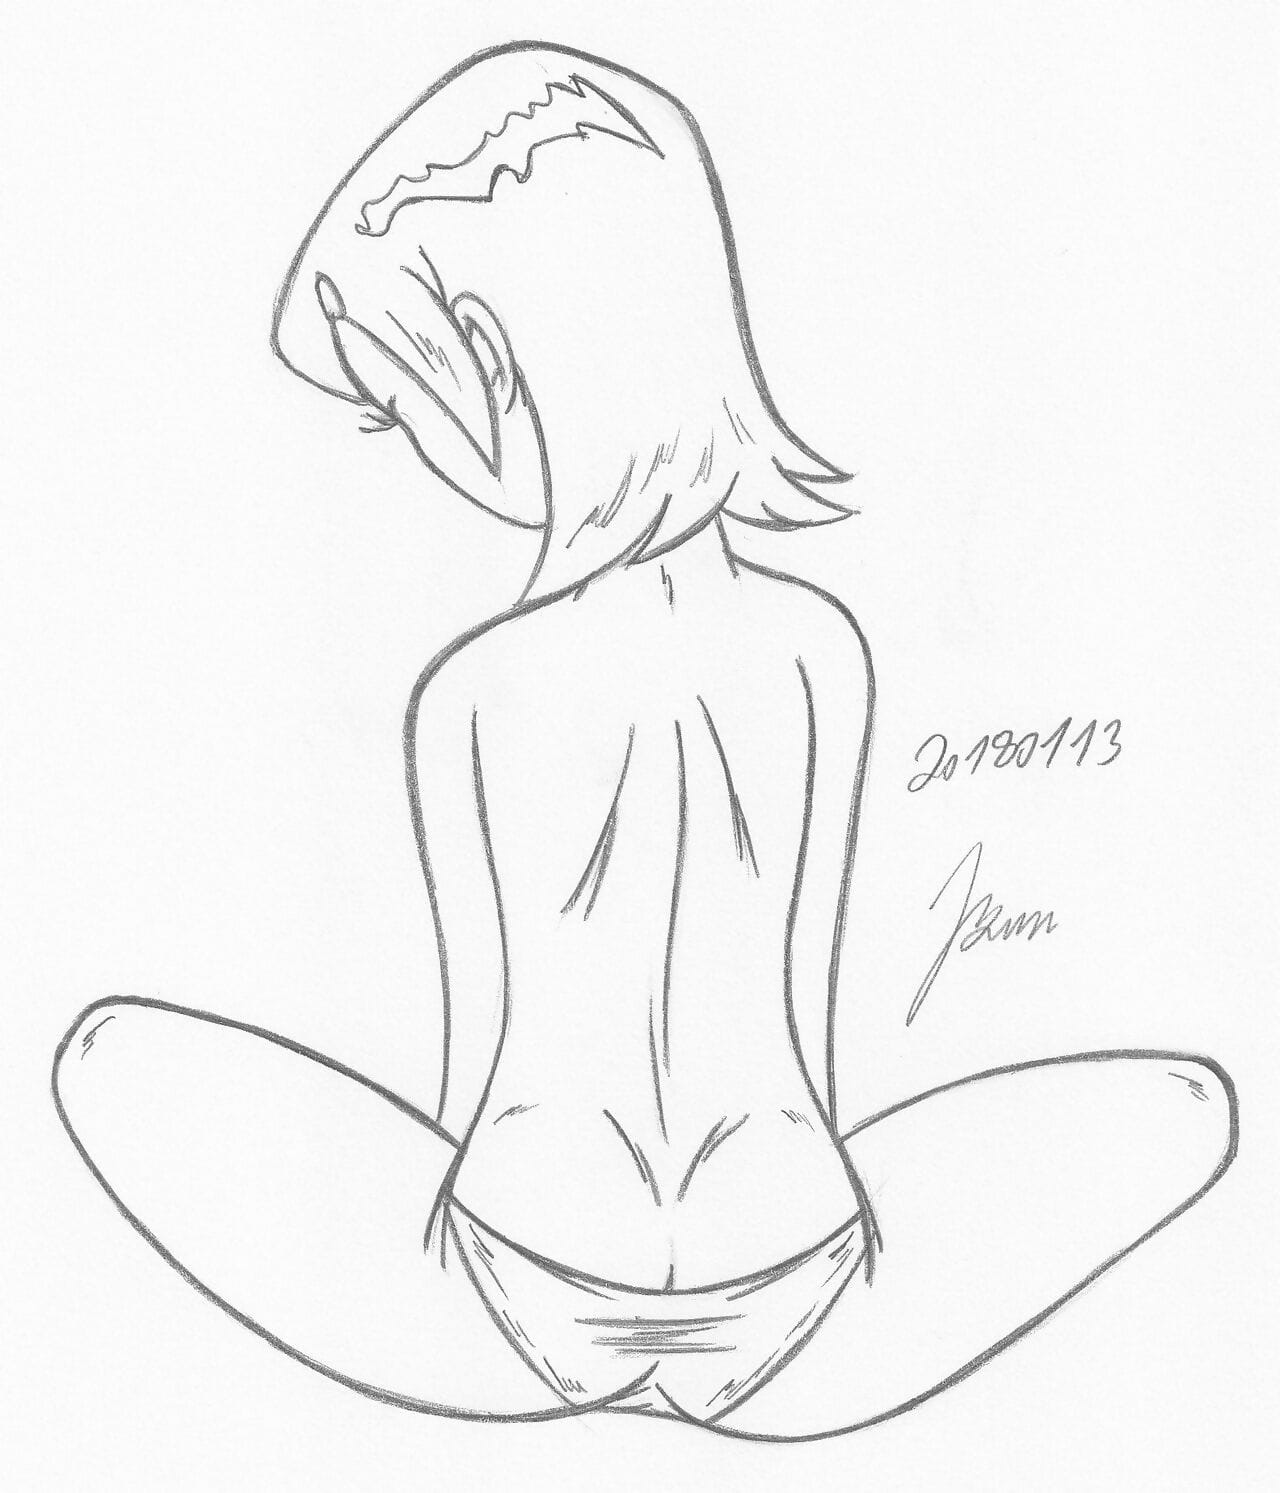 Gwen Tennyson_ ben10_My miny Sketches work_5 page 1